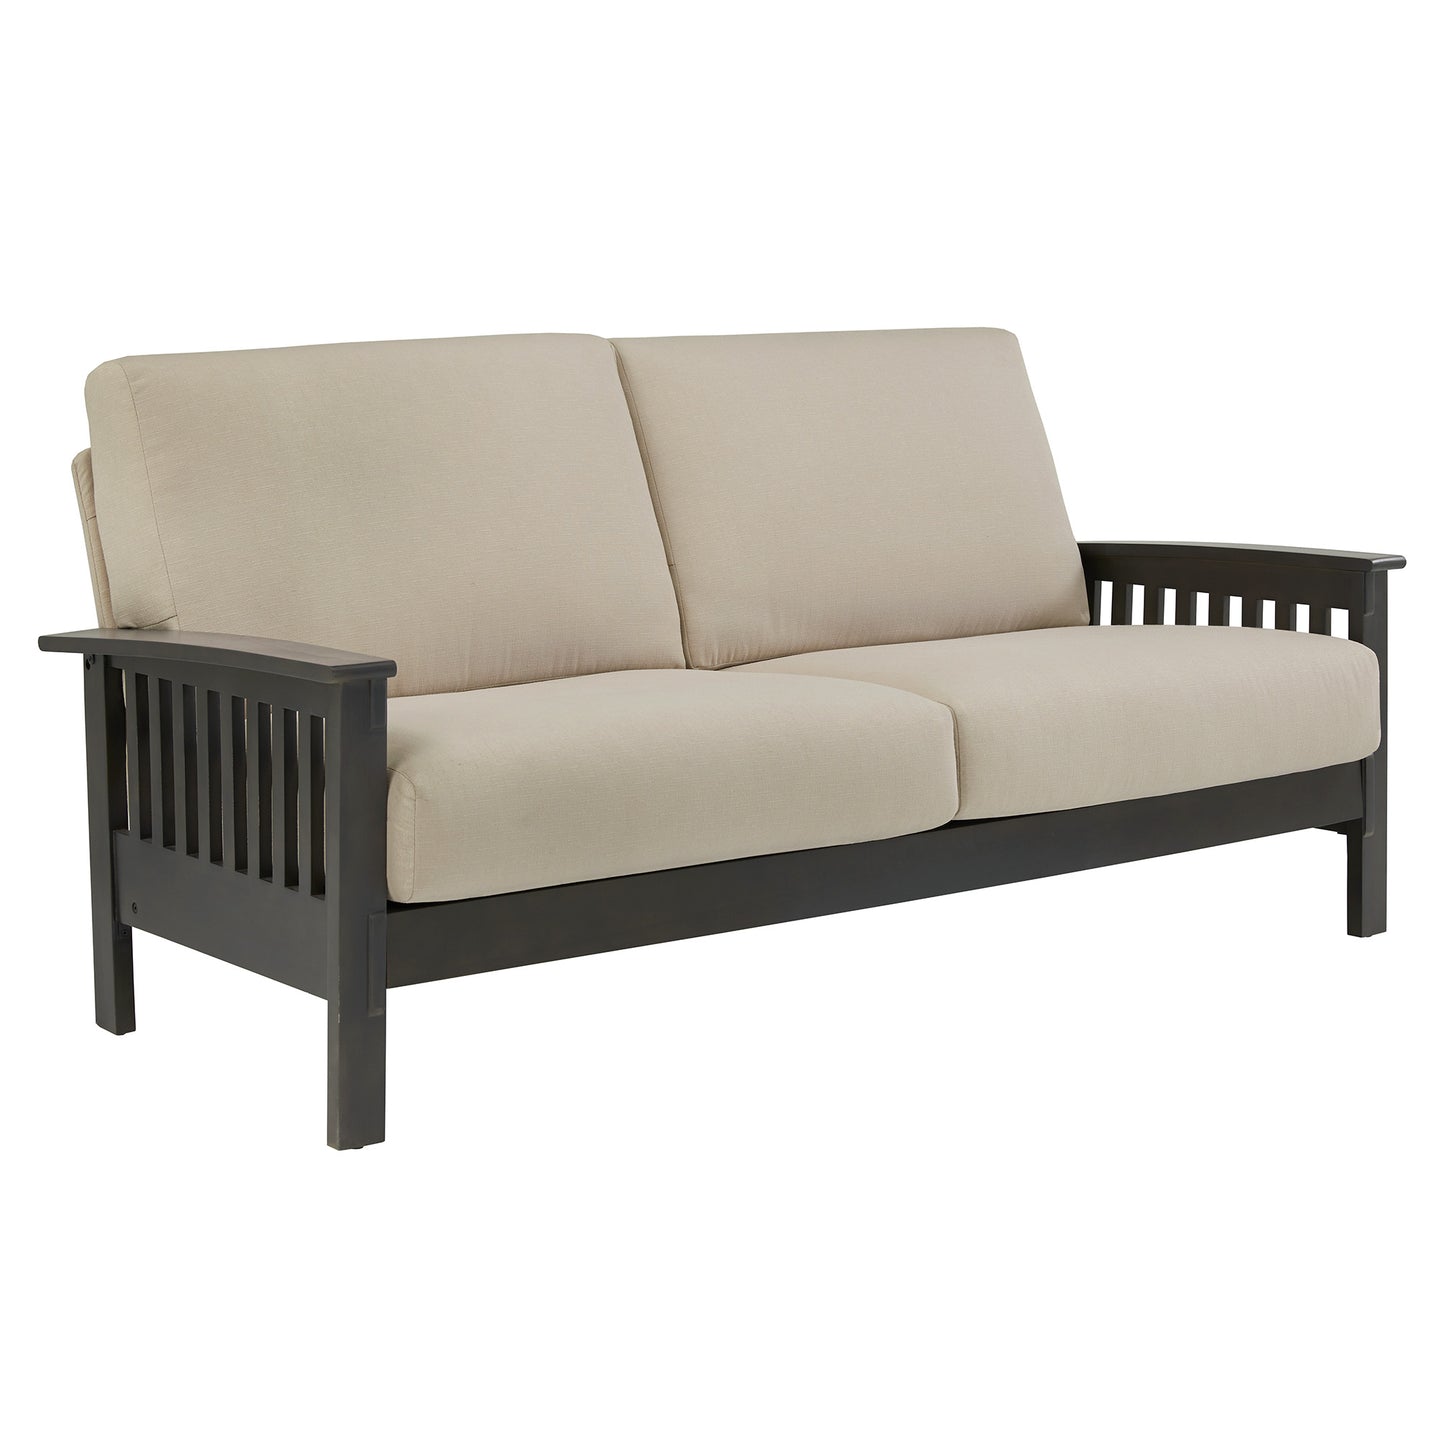 Mission-Style Wood Sofa - Beige Linen, Dark Grey Finish